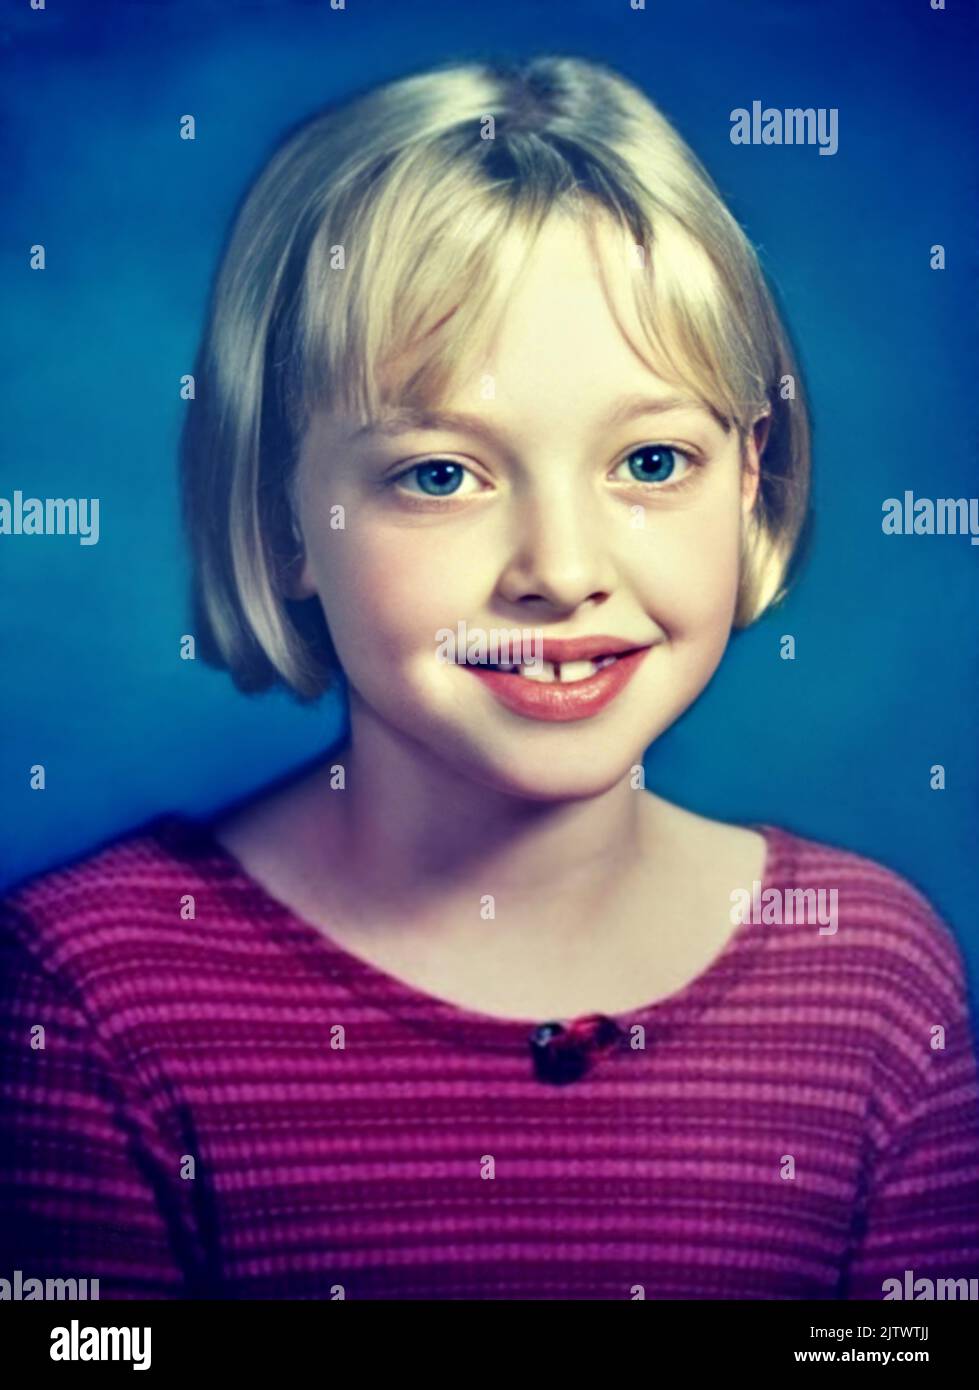 1994 ca , USA : The american actress , model and singer  AMANDA SEYFRIED ( born 3 december 1985 ) when was a young girl aged 9, photo from SCHOOL YEARBOOK . Unknown photographer .- HISTORY - FOTO STORICHE - ATTRICE - MOVIE - CINEMA  - personalità da da giovane giovani - personality personalities when was young - ANNUARIO SCOLASTICO - SEX SYMBOL - TEENAGER - blonde - bionda - smile - sorriso - BAMBINA - bambino - bambini - CHILD - CHILDREN - CHILDHOOD - INFANZIA --- ARCHIVIO GBB Stock Photo